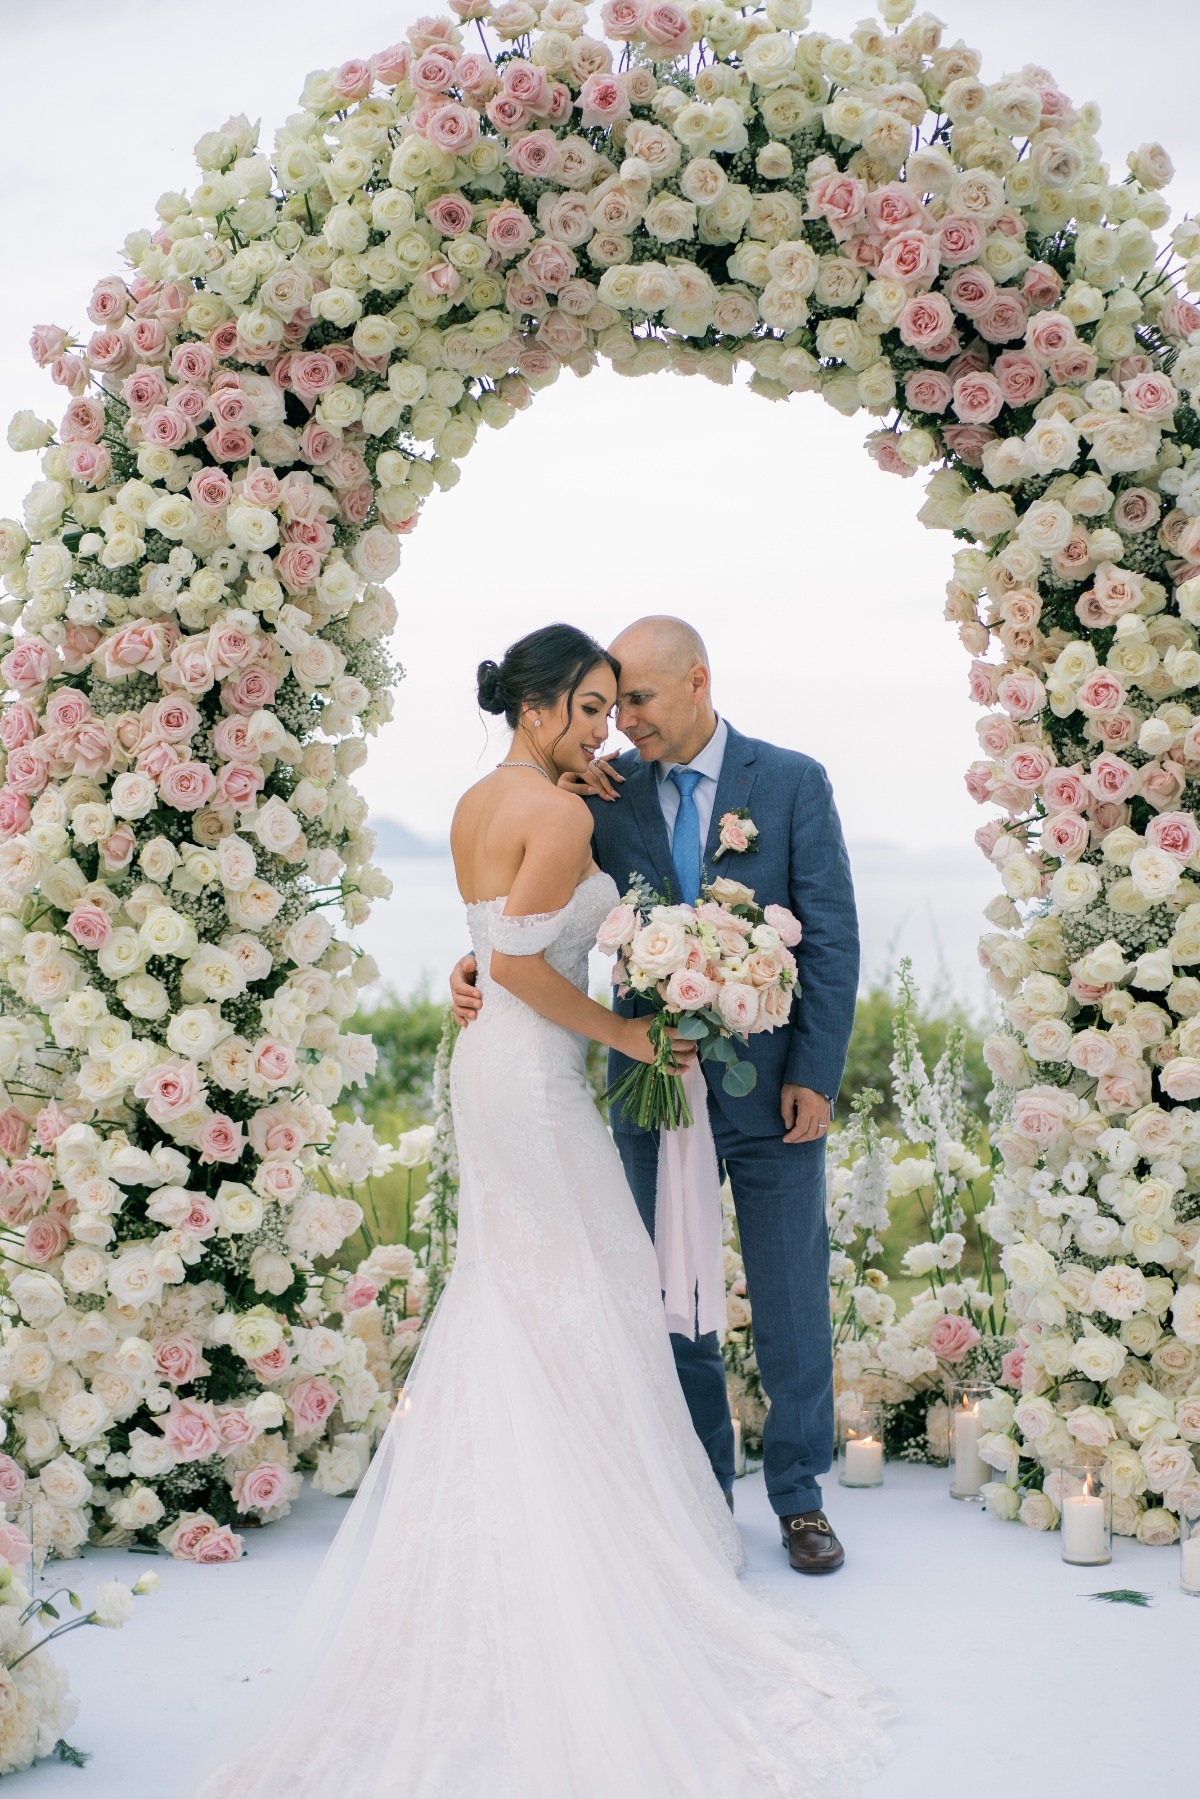 A sea of roses framed this romantic Phuket resort wedding